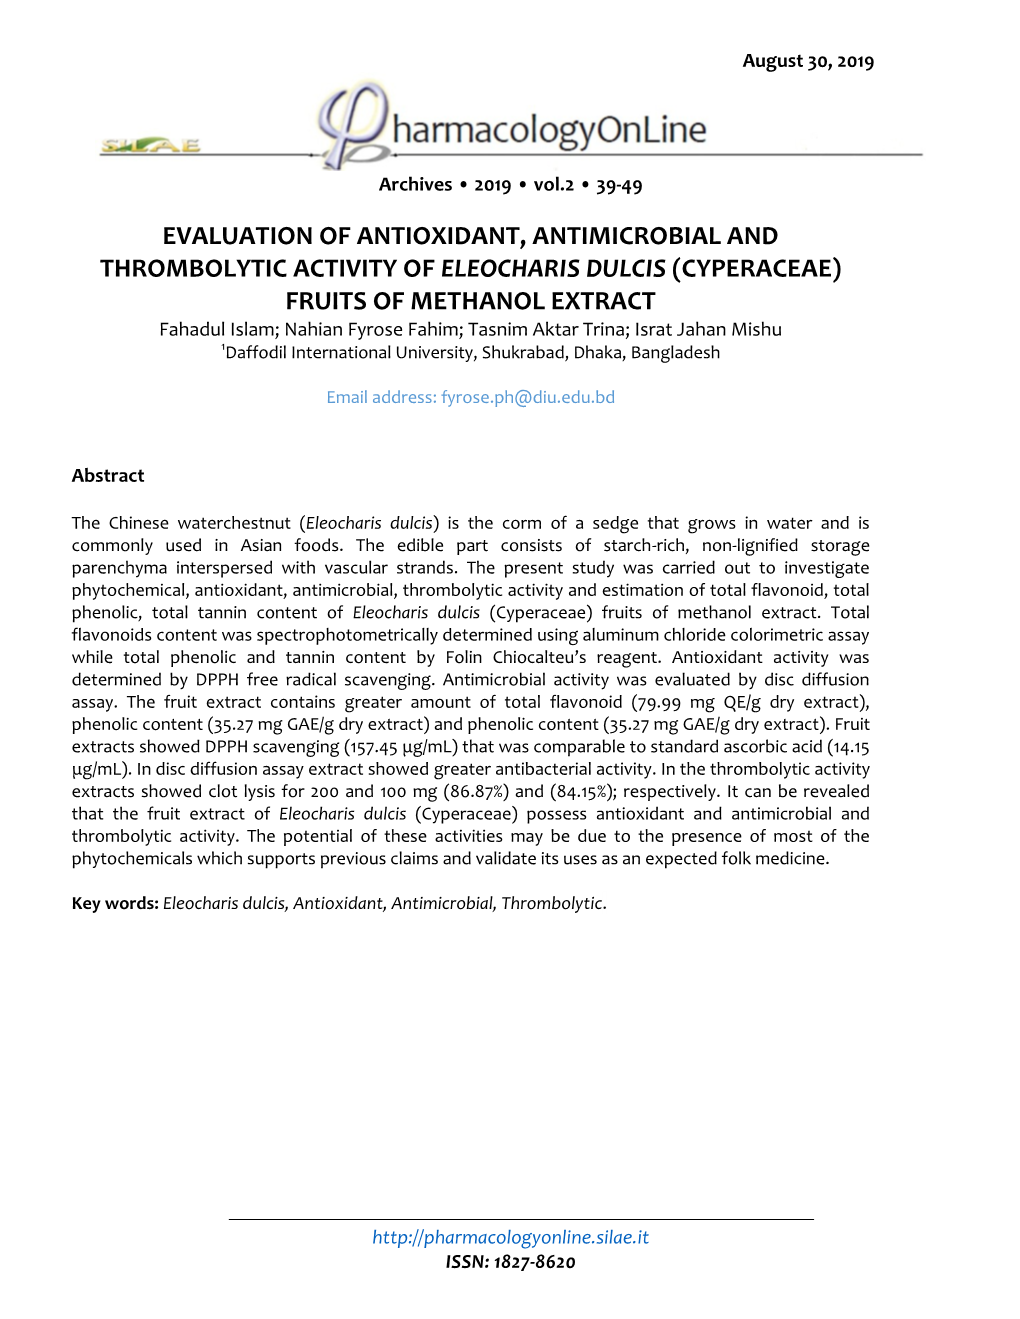 Evaluation of Antioxidant, Antimicrobial and Thrombolytic Activity of Eleocharis Dulcis (Cyperaceae) Fruits of Methanol Extract